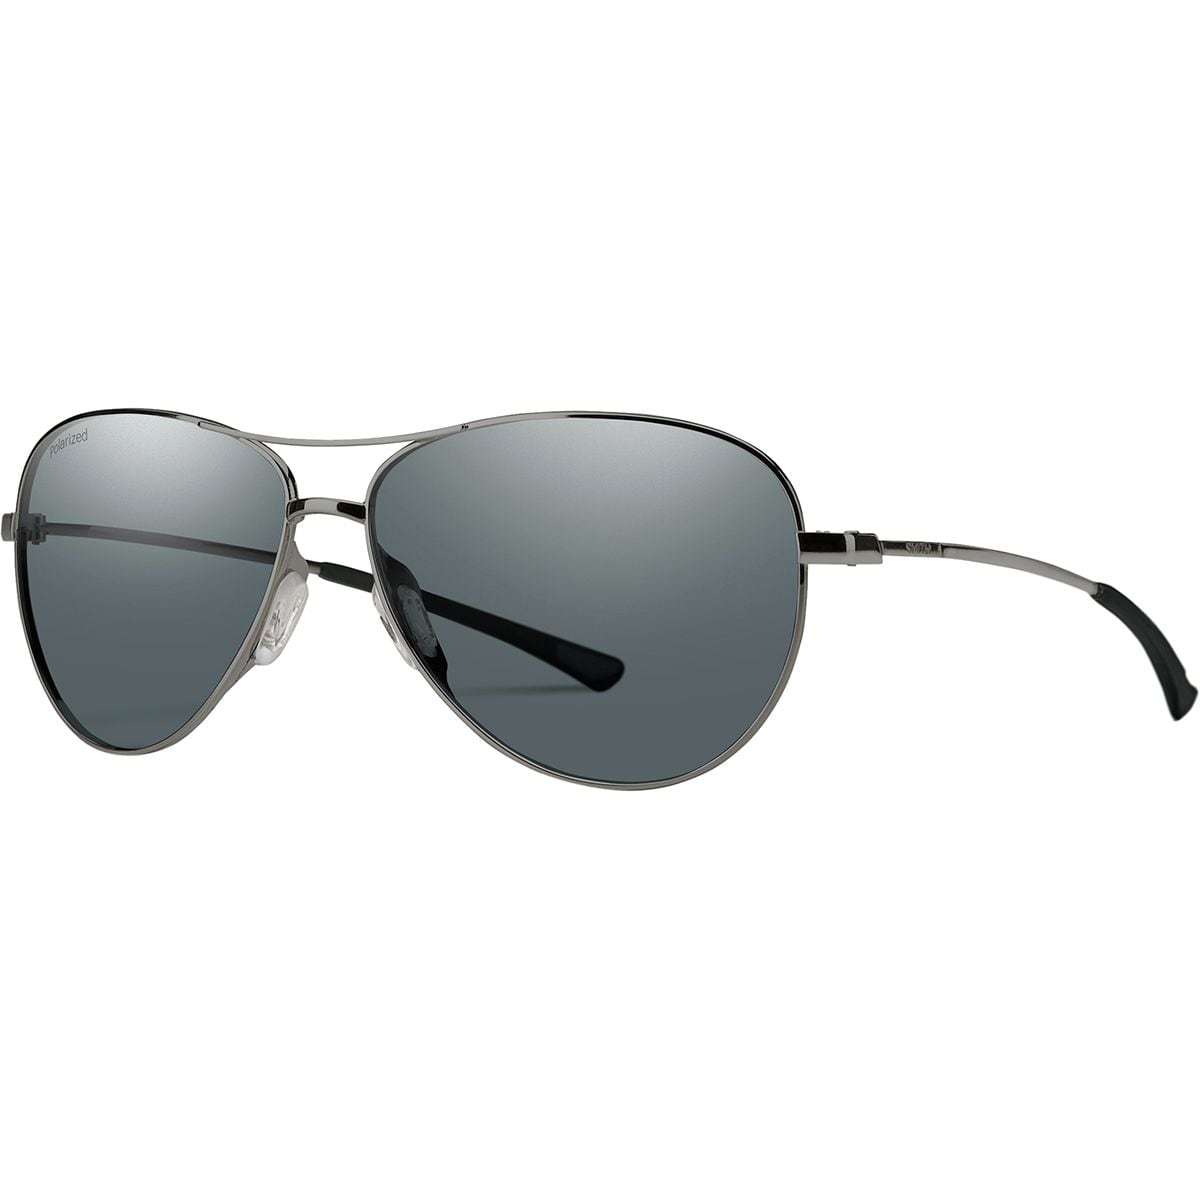 Поляризационные солнцезащитные очки langley Smith, цвет dark ruthenium frame/gray polarized